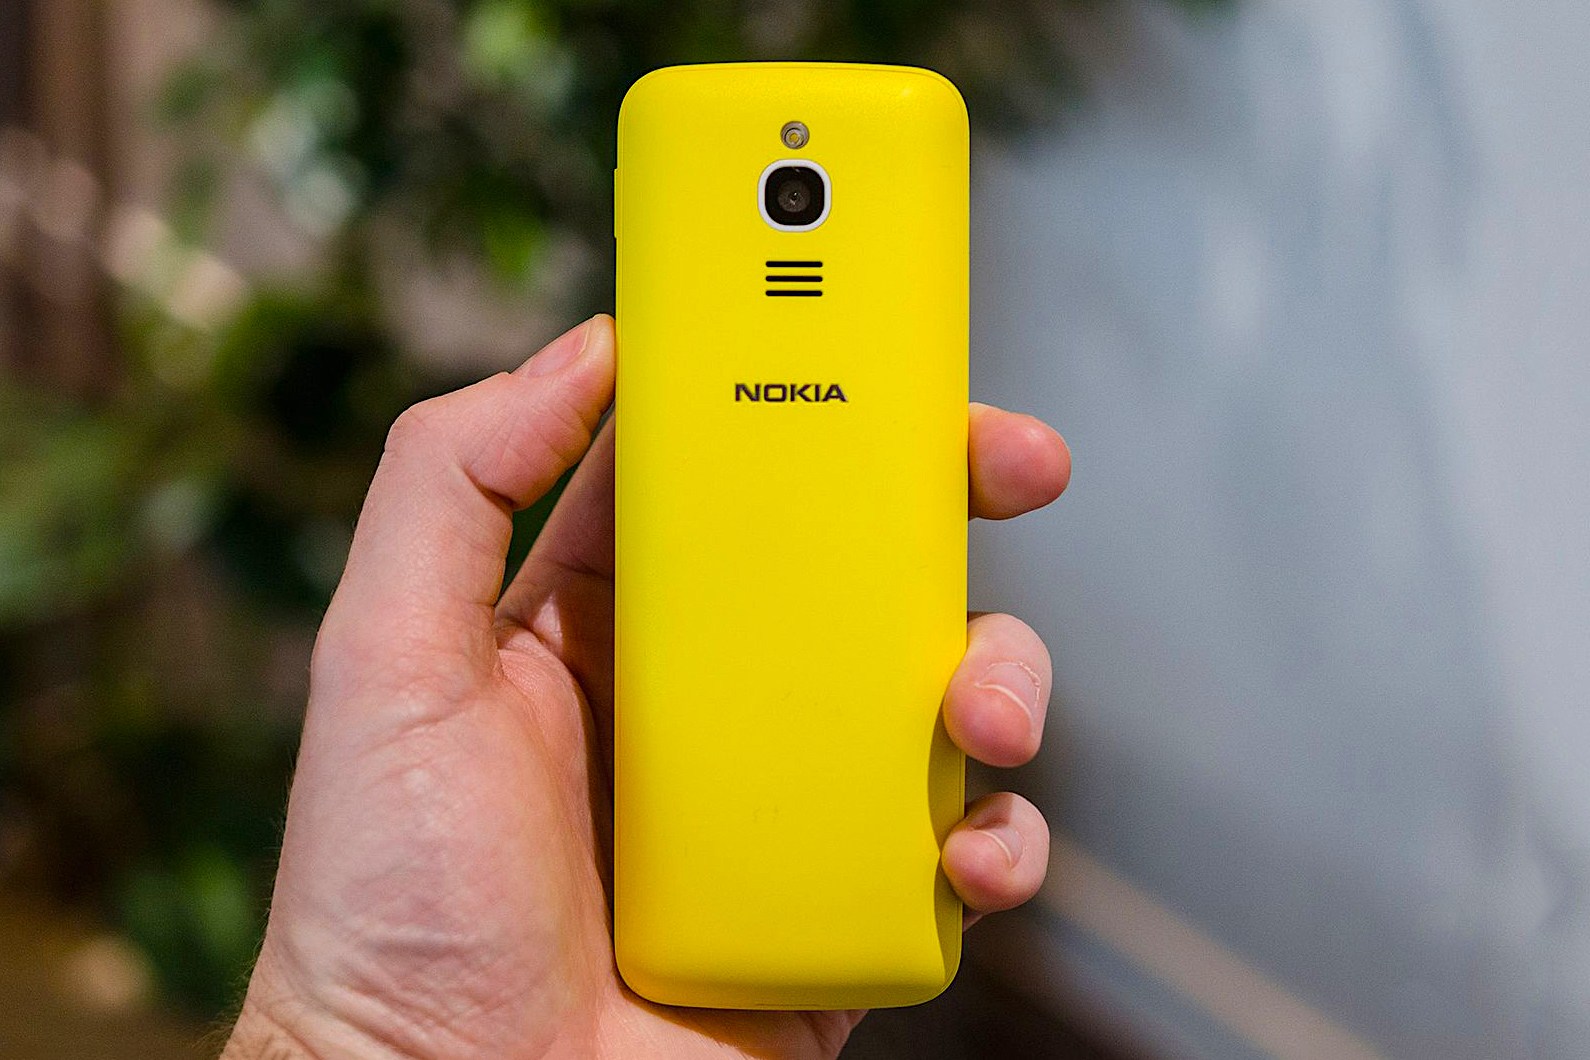 Nokia 再次传奇《The Matrix》中的經典下滑盖手机 8110